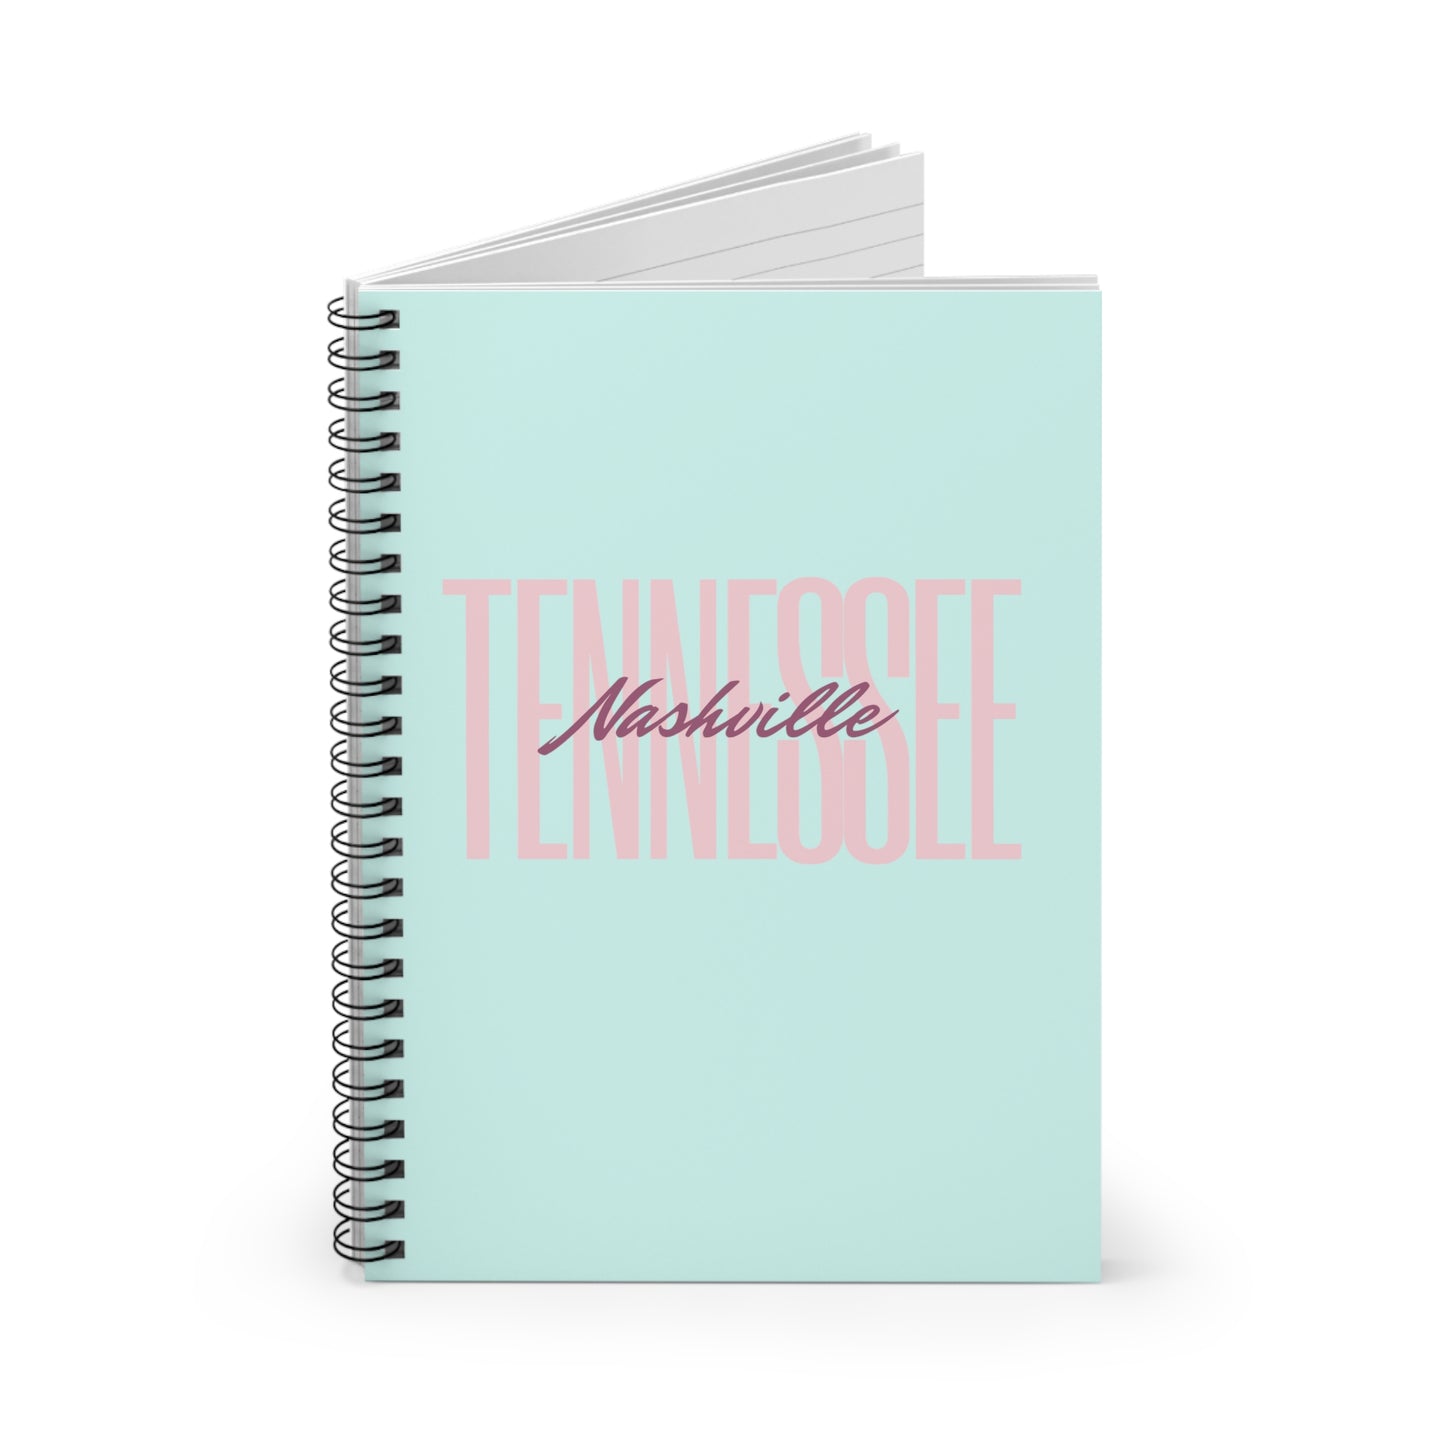 Nashville Notebook - Mint